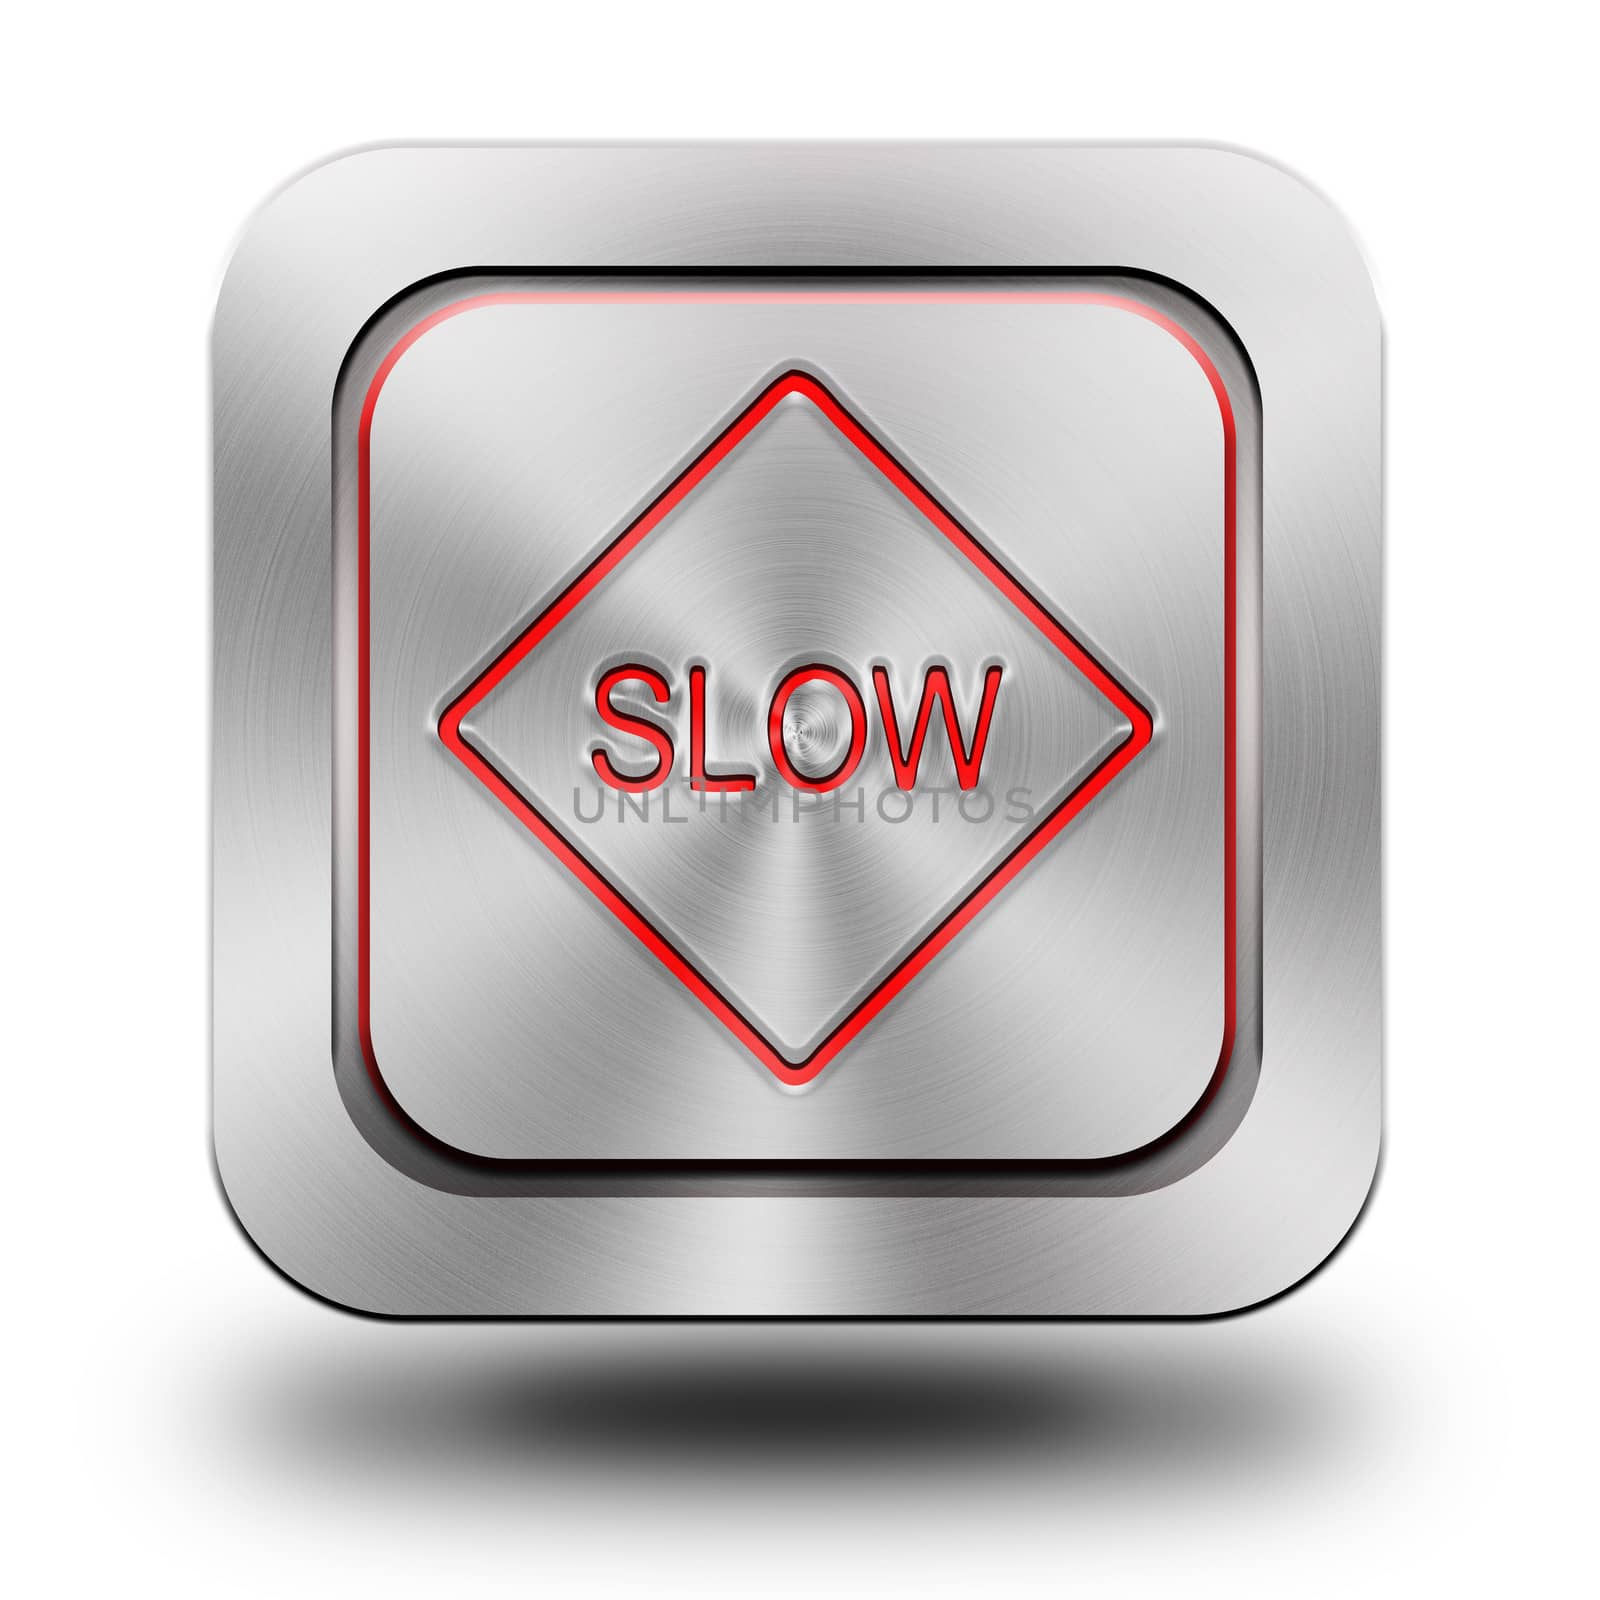 Slow aluminum glossy icon, button, sign by konradkerker